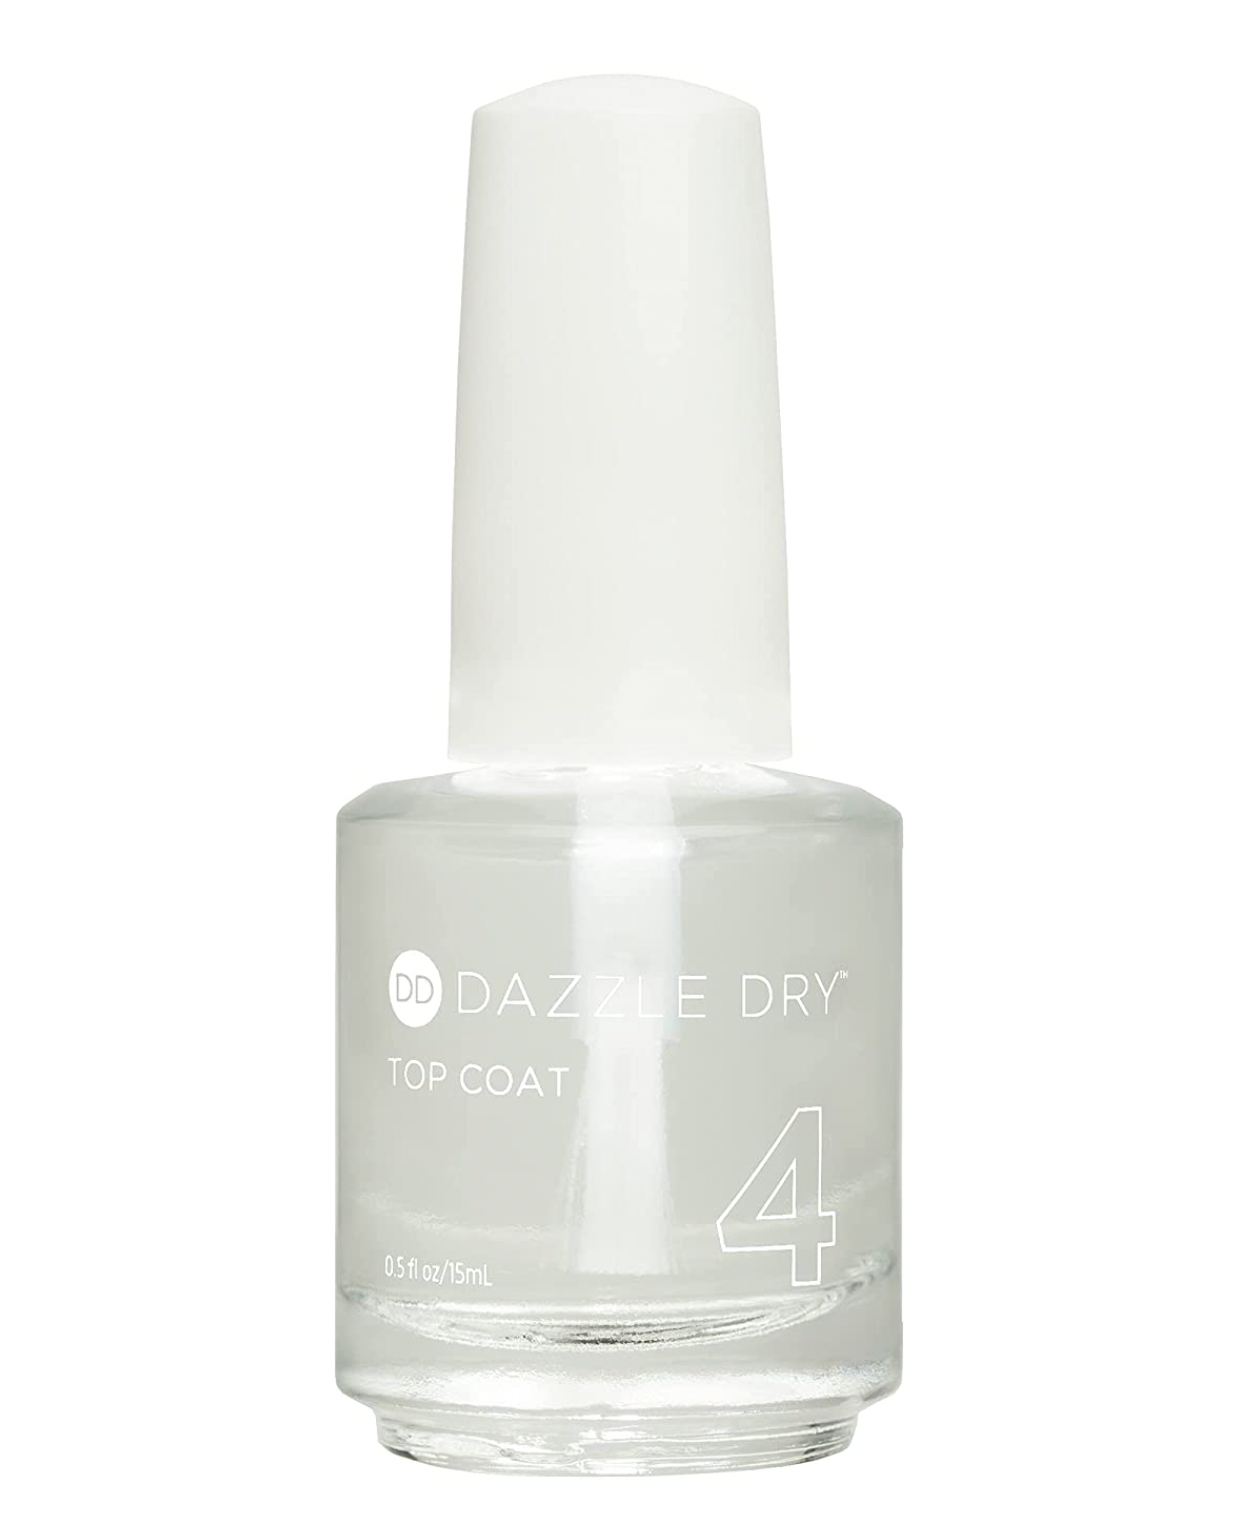 Mystic Blue - Nail Polish by Dazzle Dry